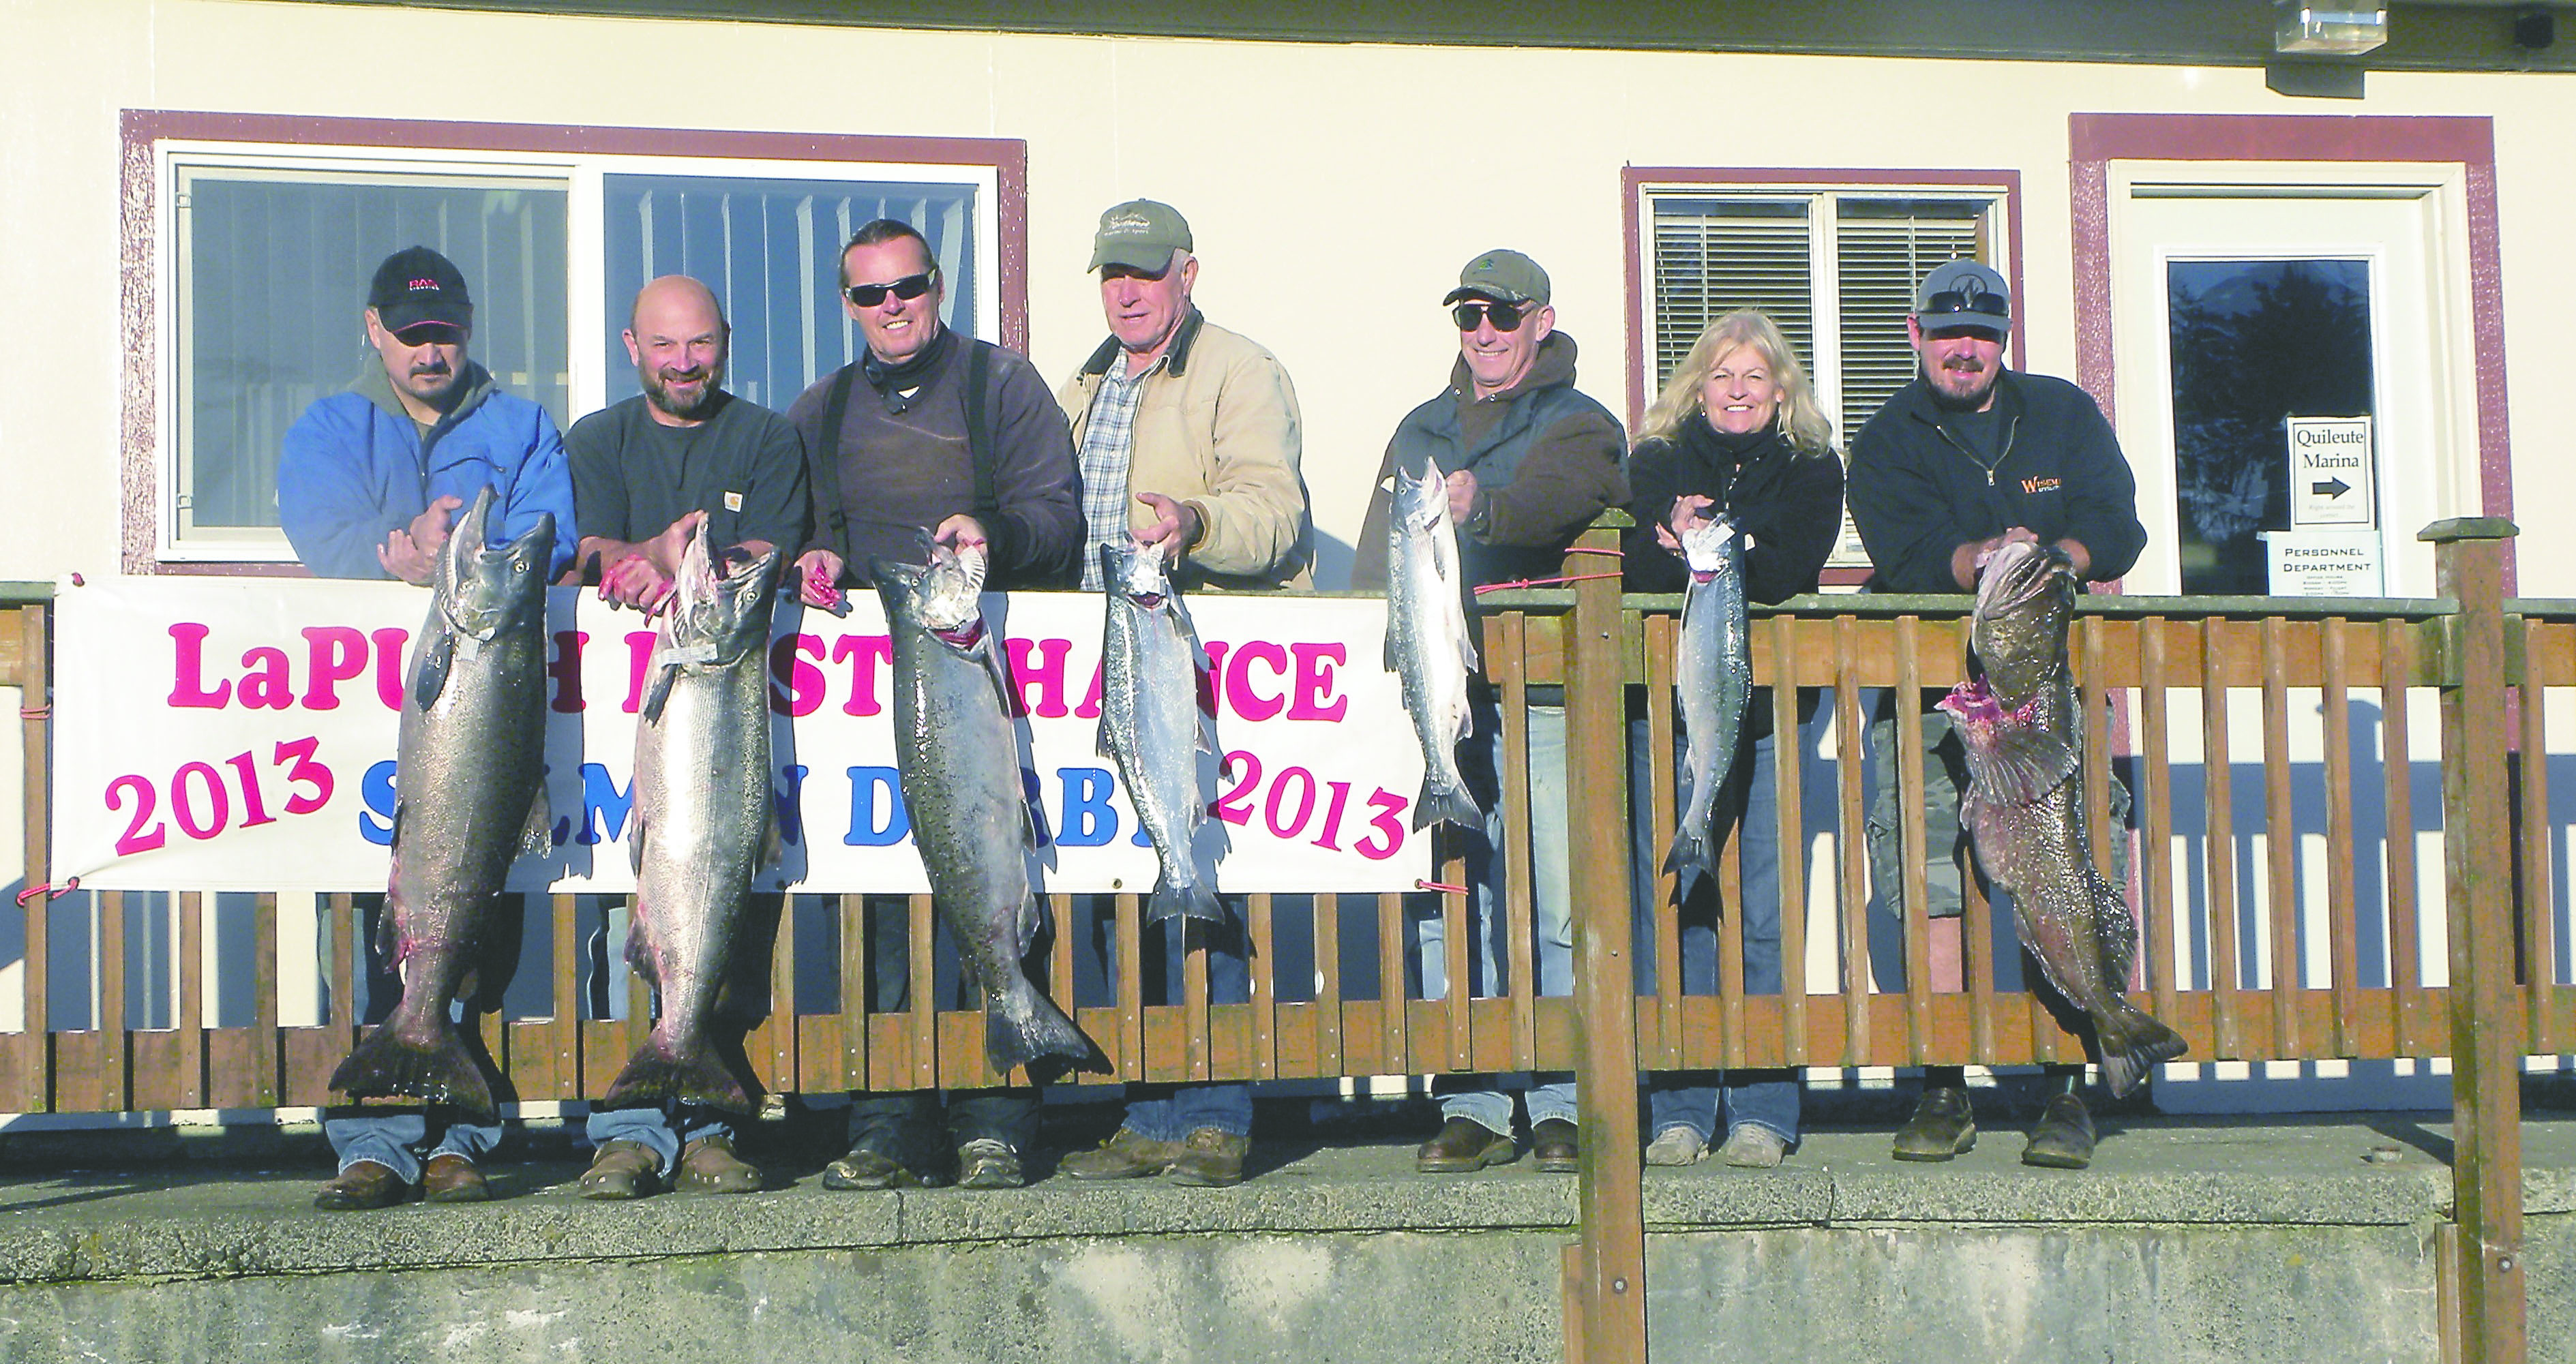 Winners of the 2013 Last Chance Salmon Derby were